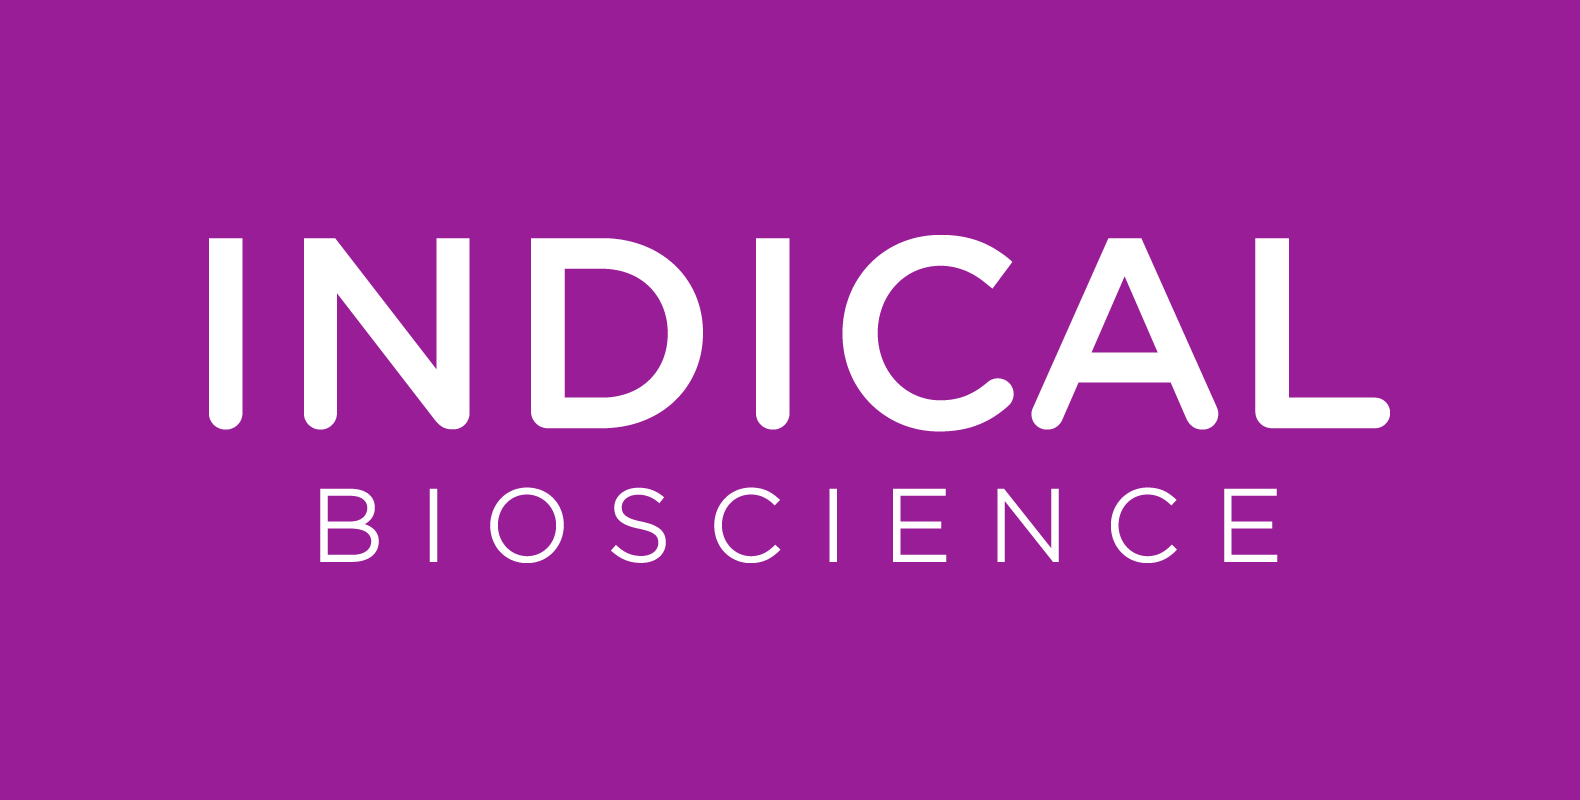 INDICAL BIOSCIENCE GmbH